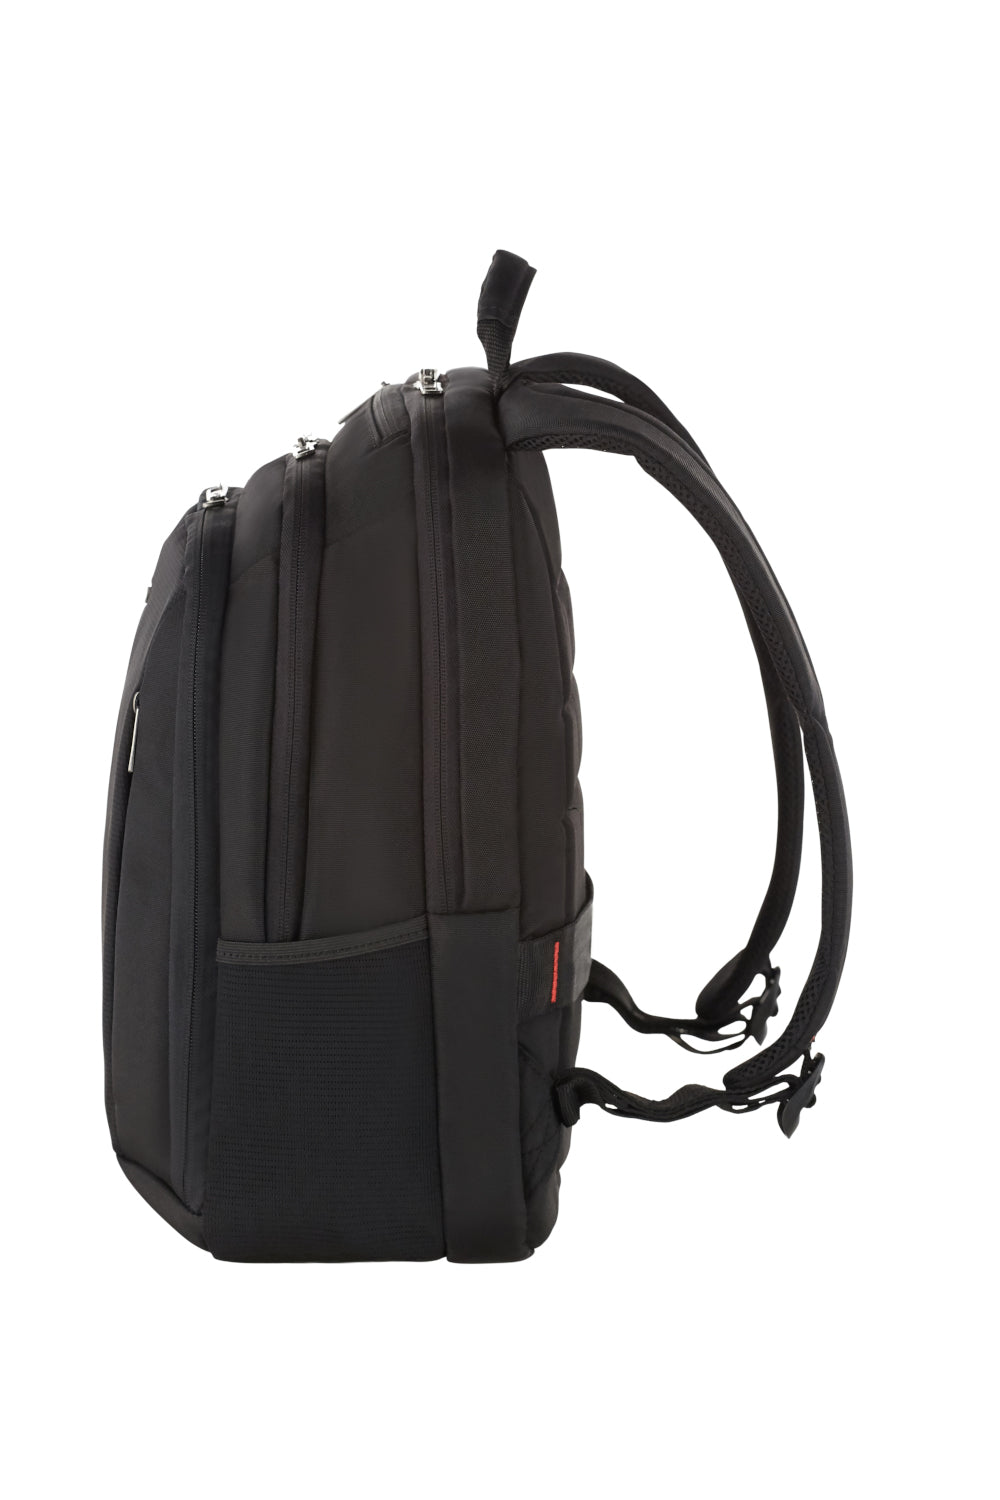 Guardit 2.0 Laptop Backpack - Schwarz - Verschiedene Größen